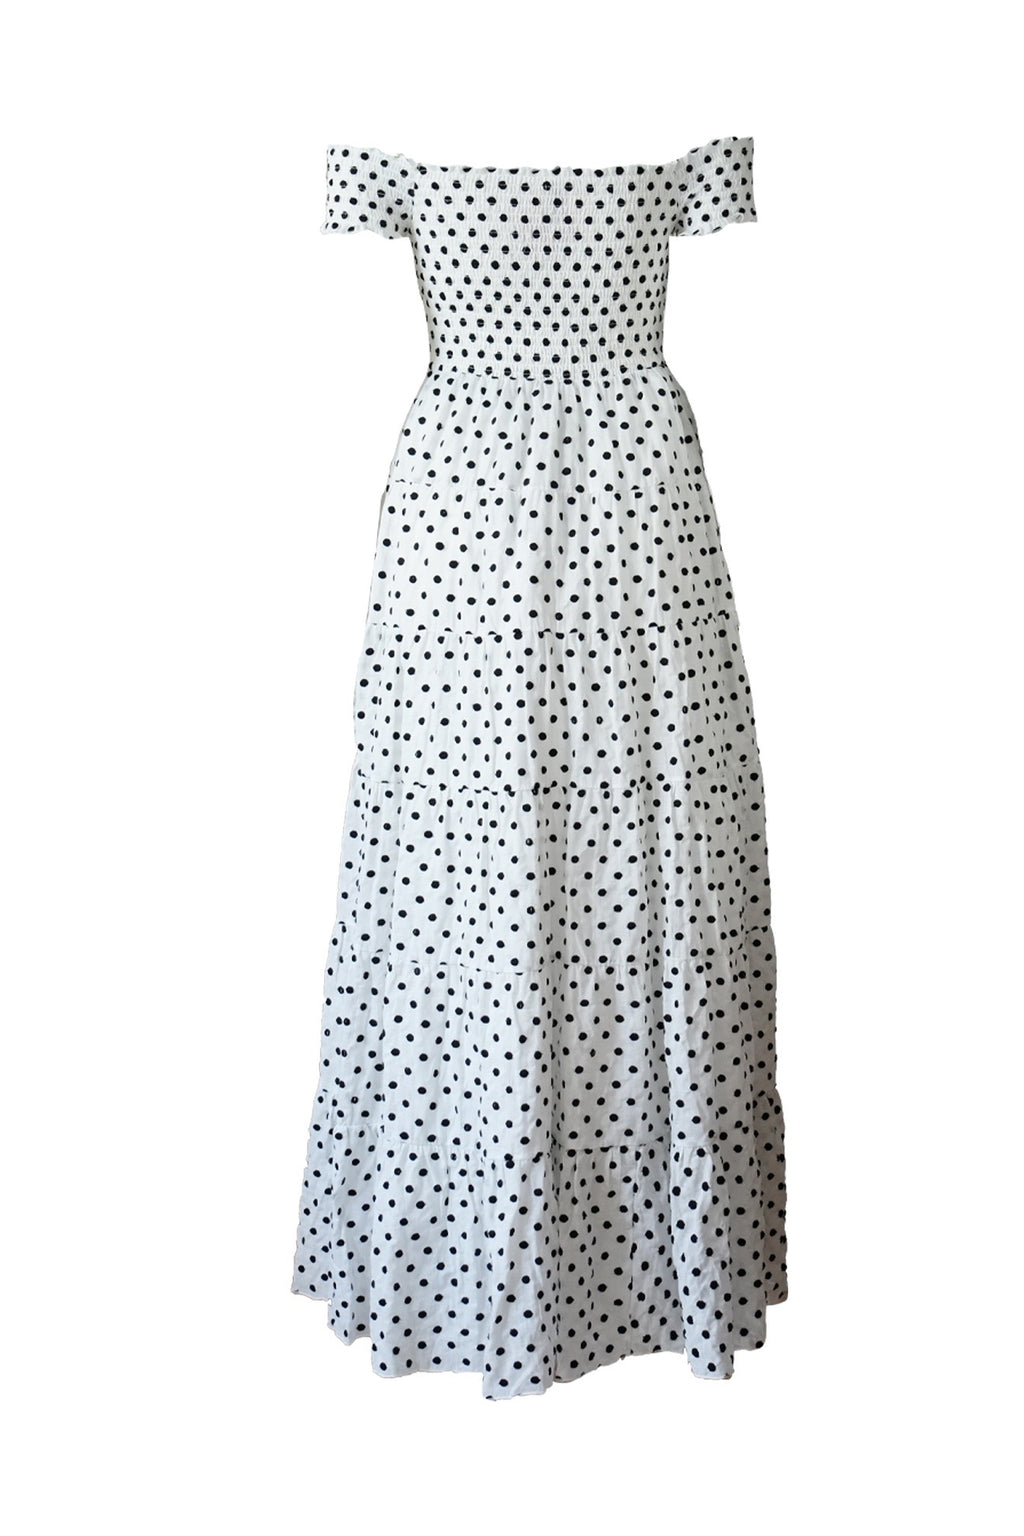 Polka Dot embroidery Off The Shoulder Dress